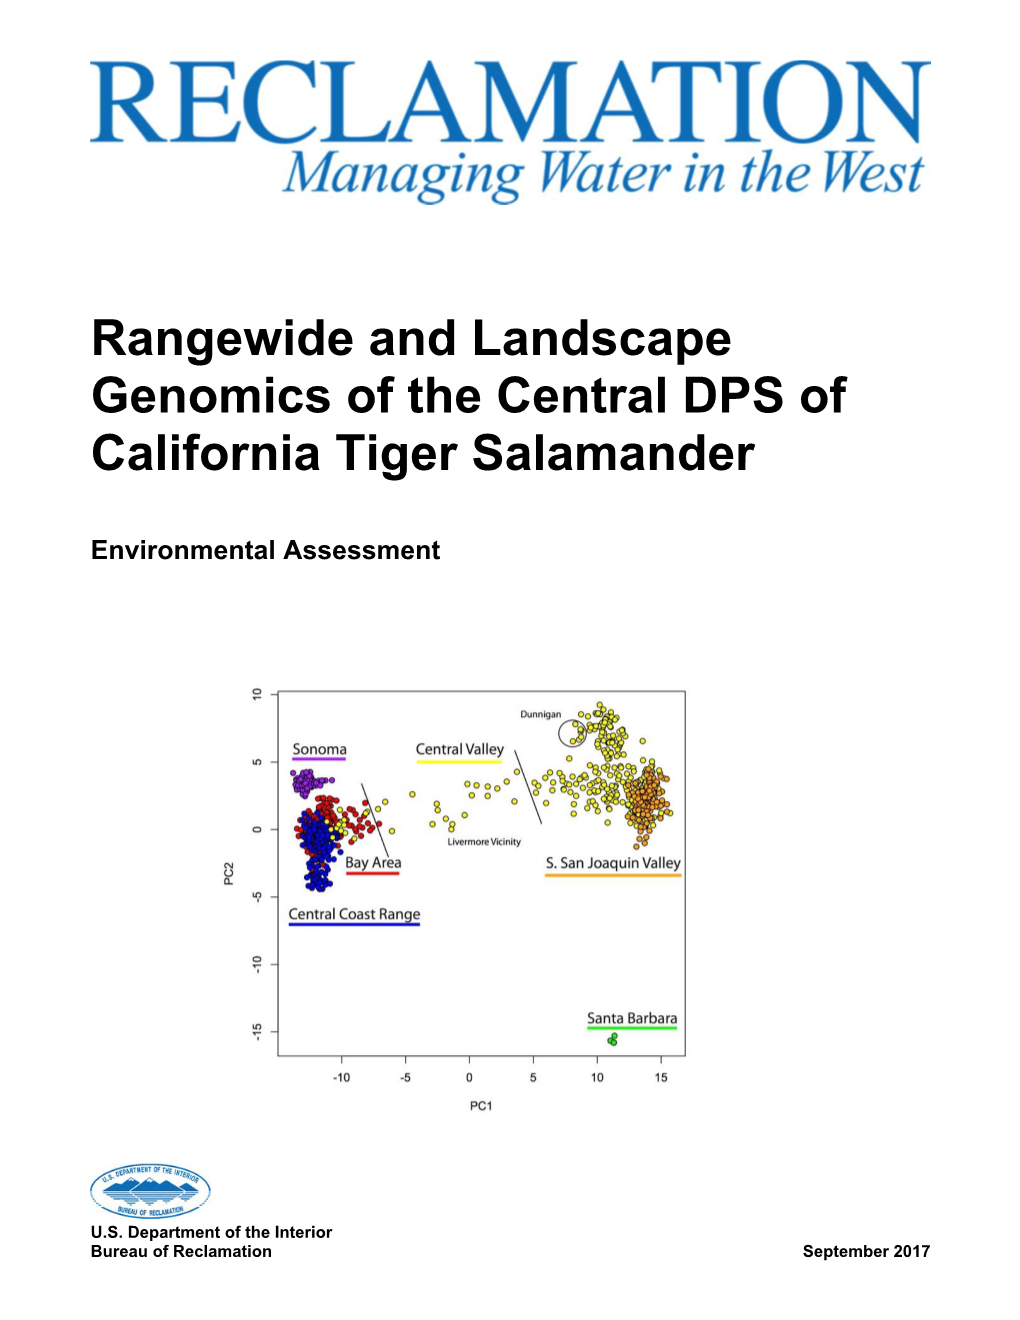 Rangewide and Landscape Genomics of the Central DPS of California Tiger Salamander